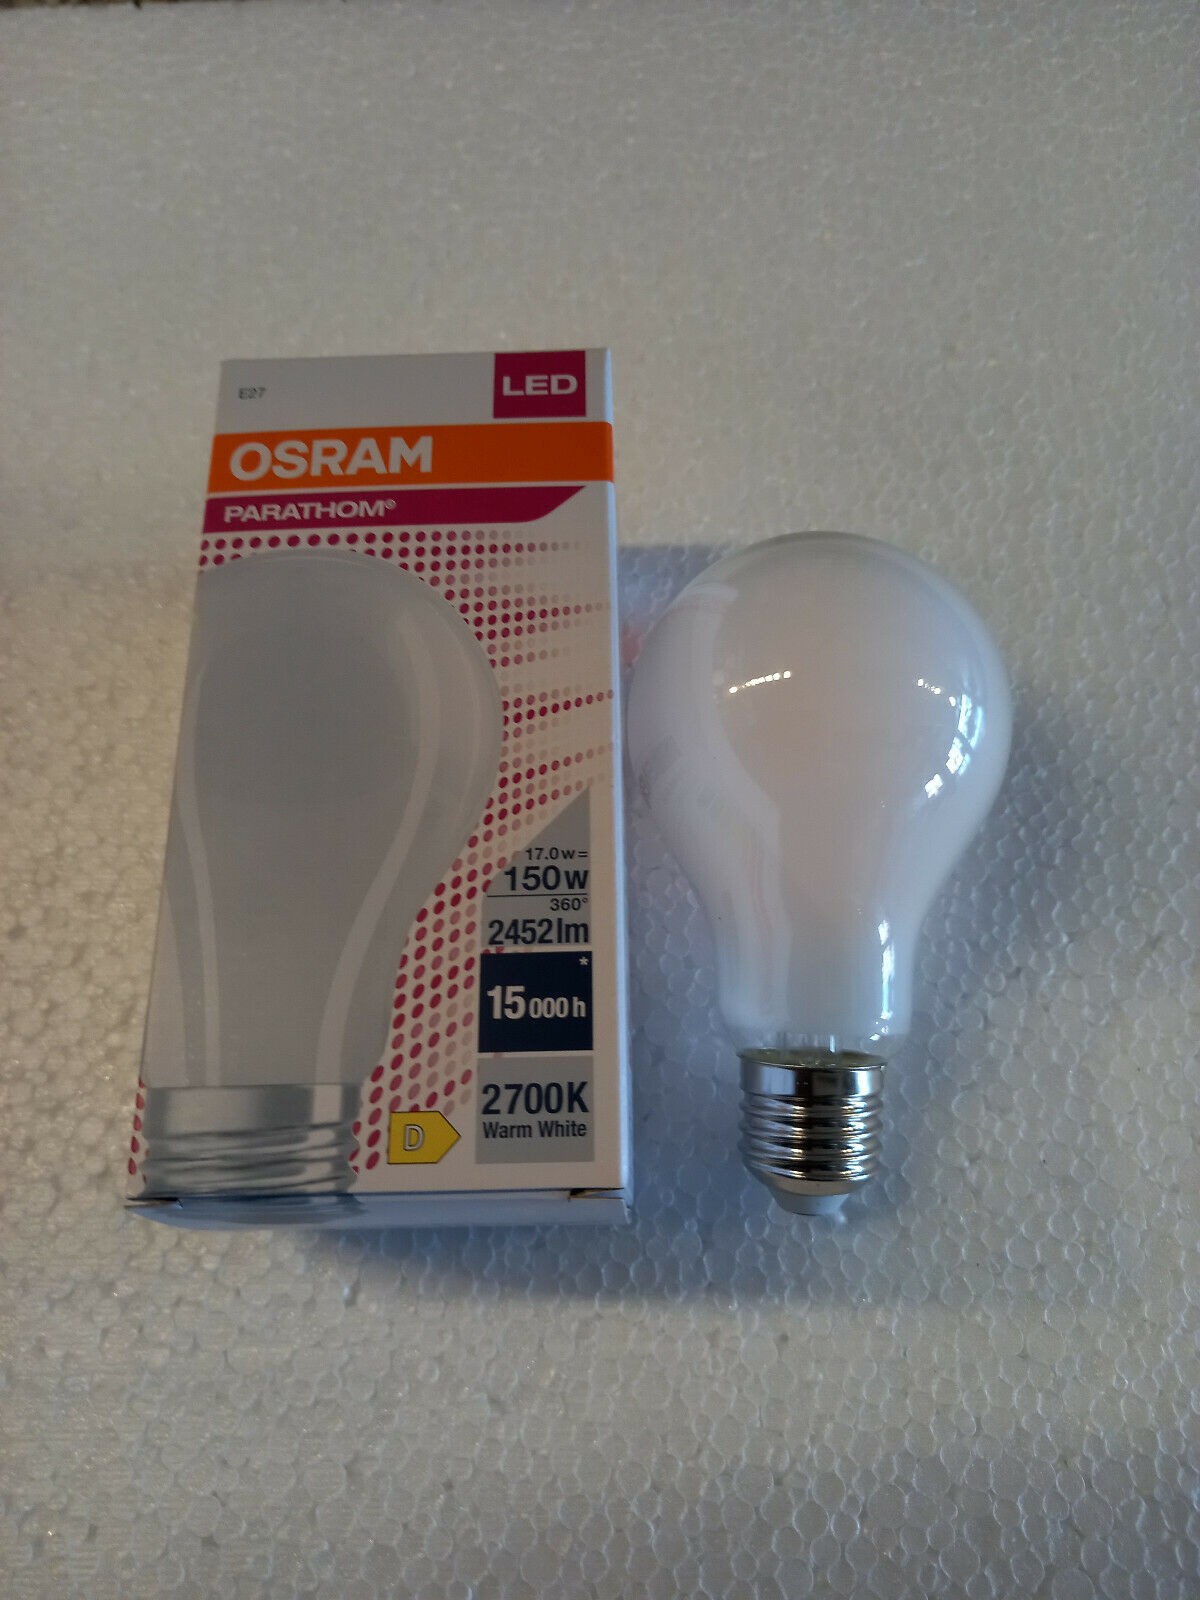 Lampadina LED E27 globo pera vetro 12W lampada filamento vintage